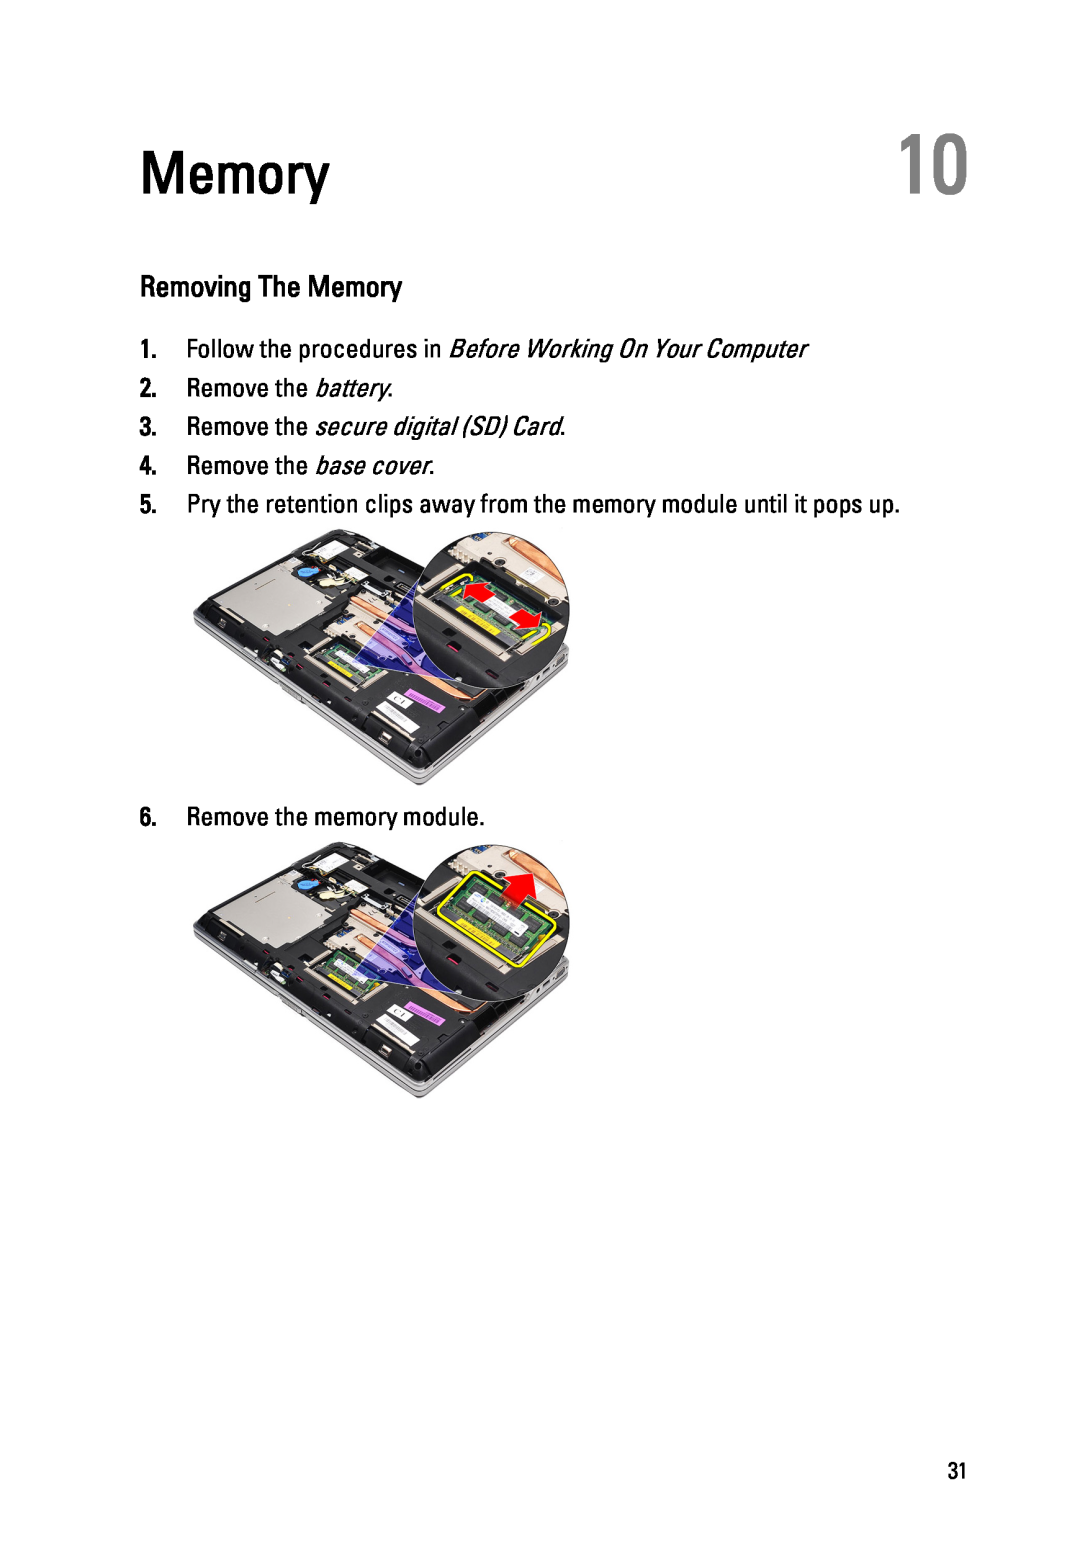 Dell E6520 Memory10, Removing The Memory, Remove the secure digital SD Card, Remove the base cover, Remove the battery 